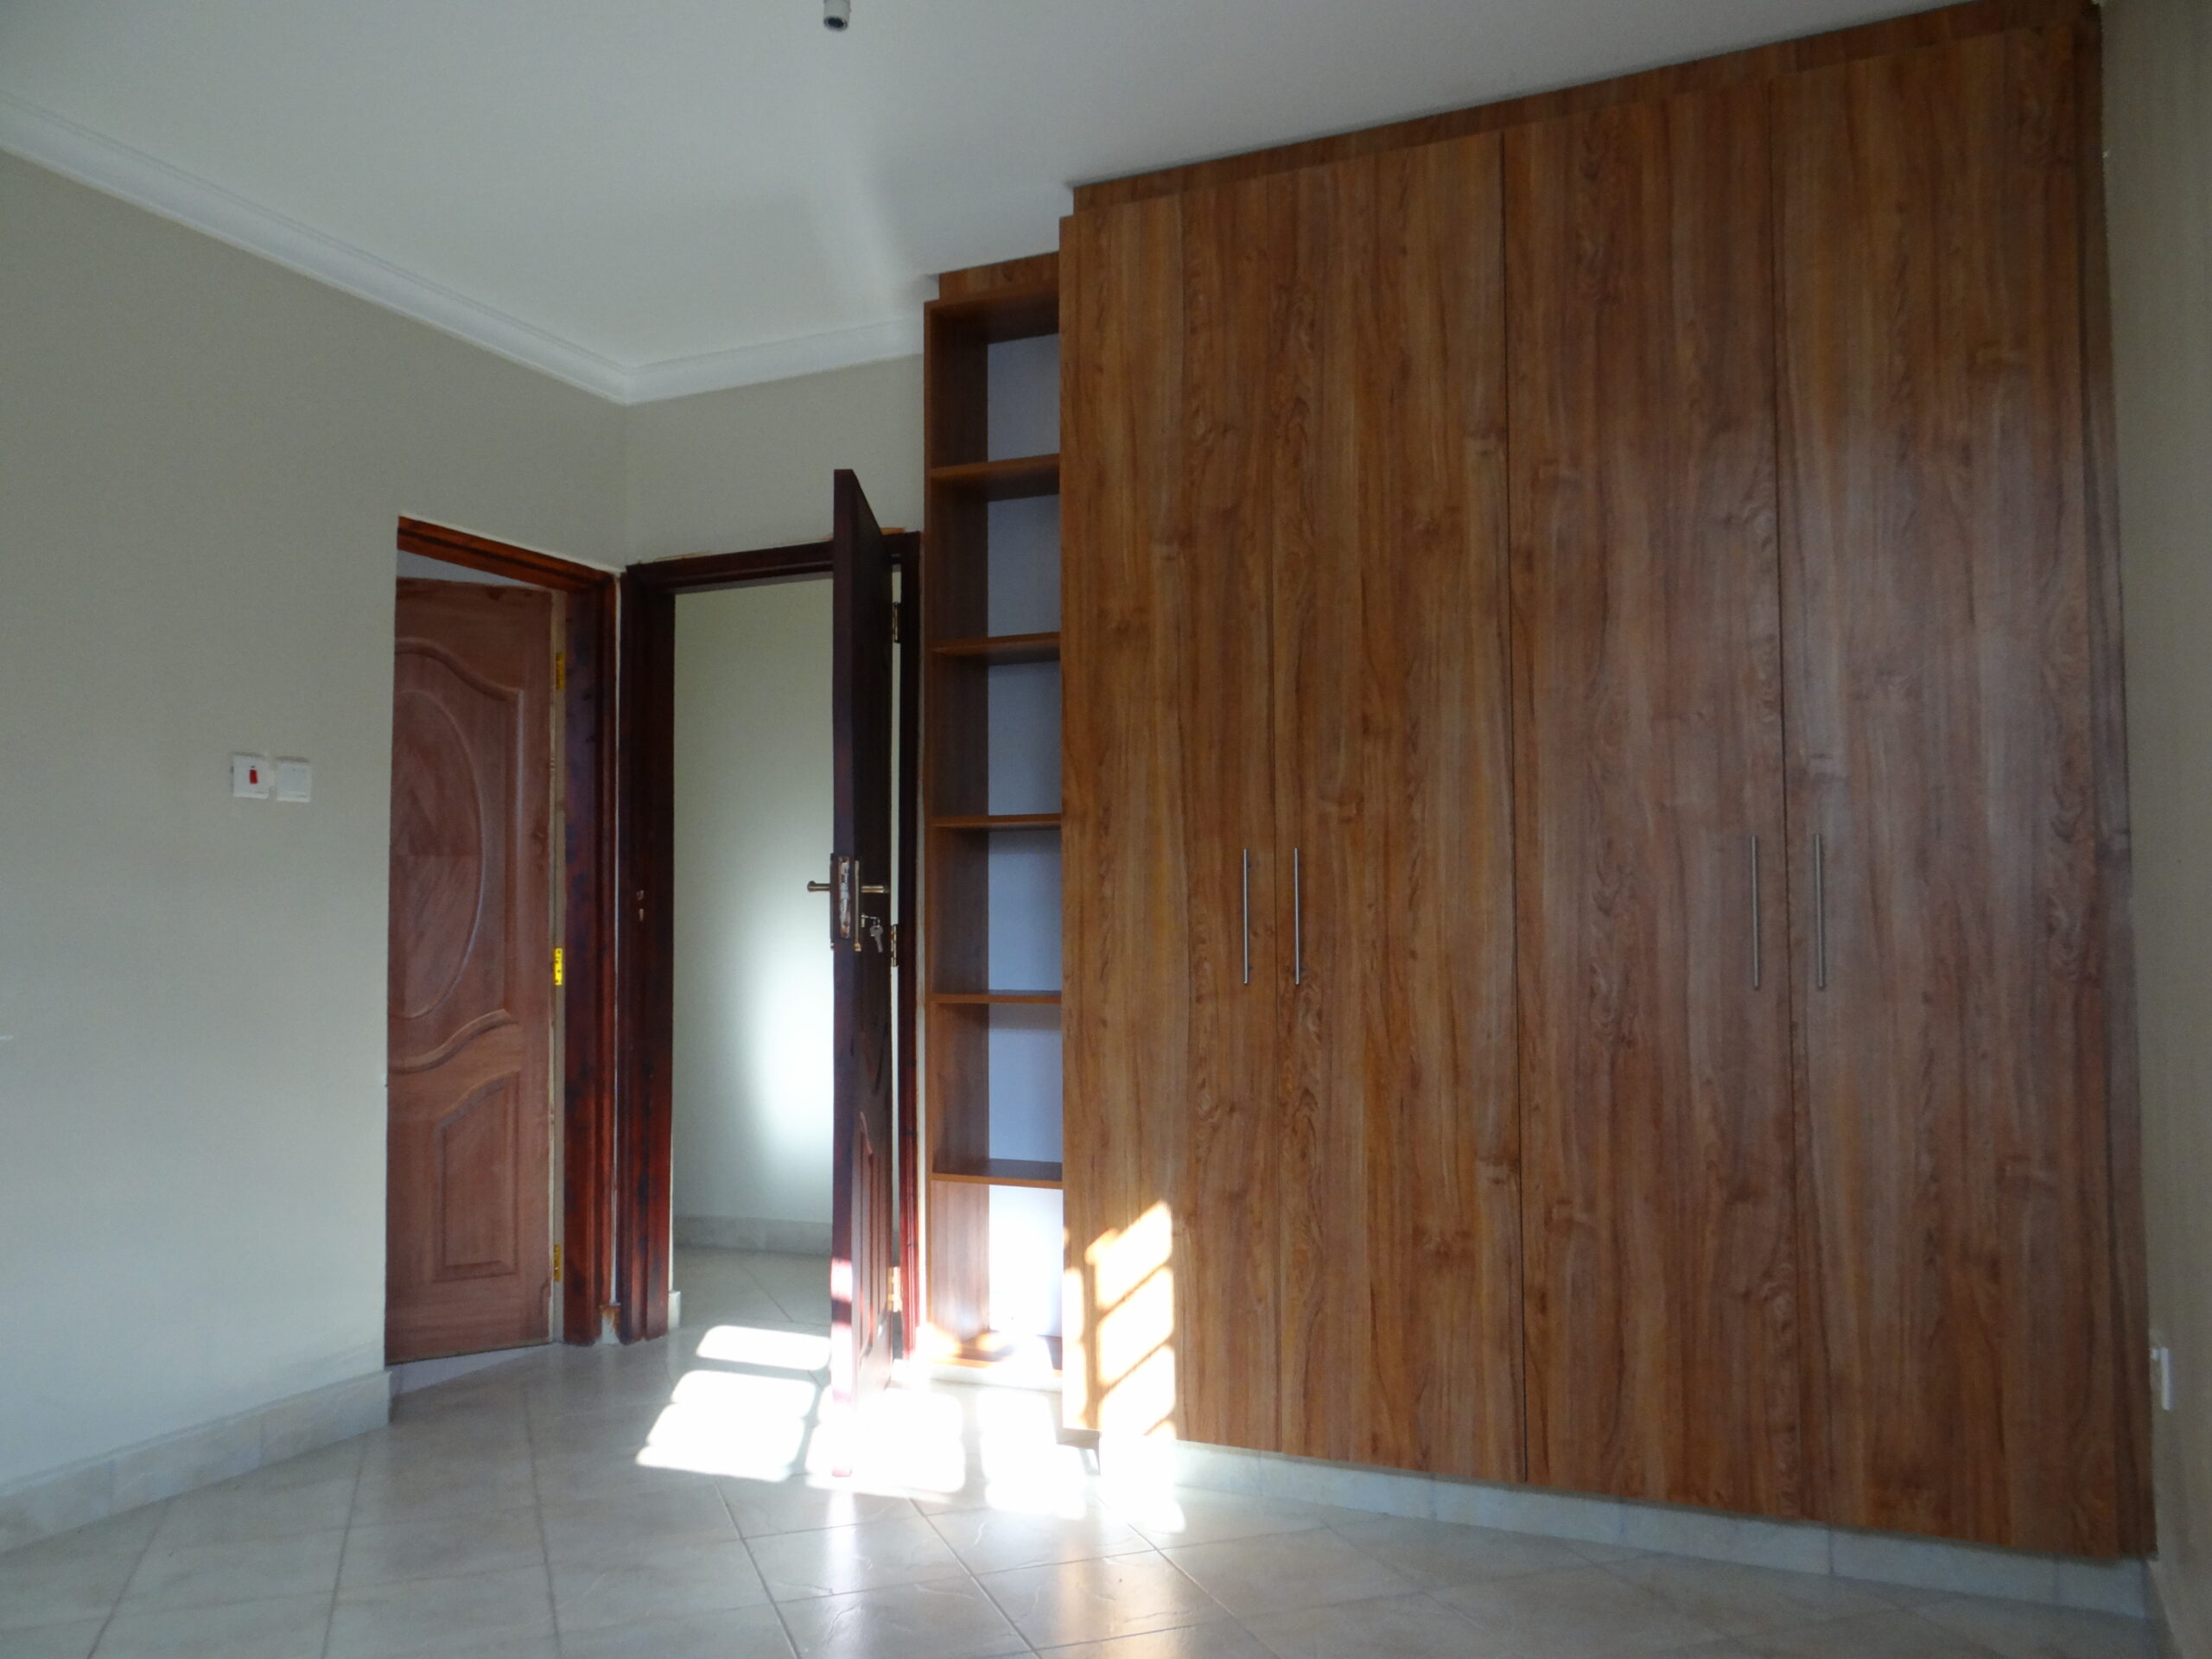 Quality 3 Bedroom House for sale in Ruiru, Matangi Road